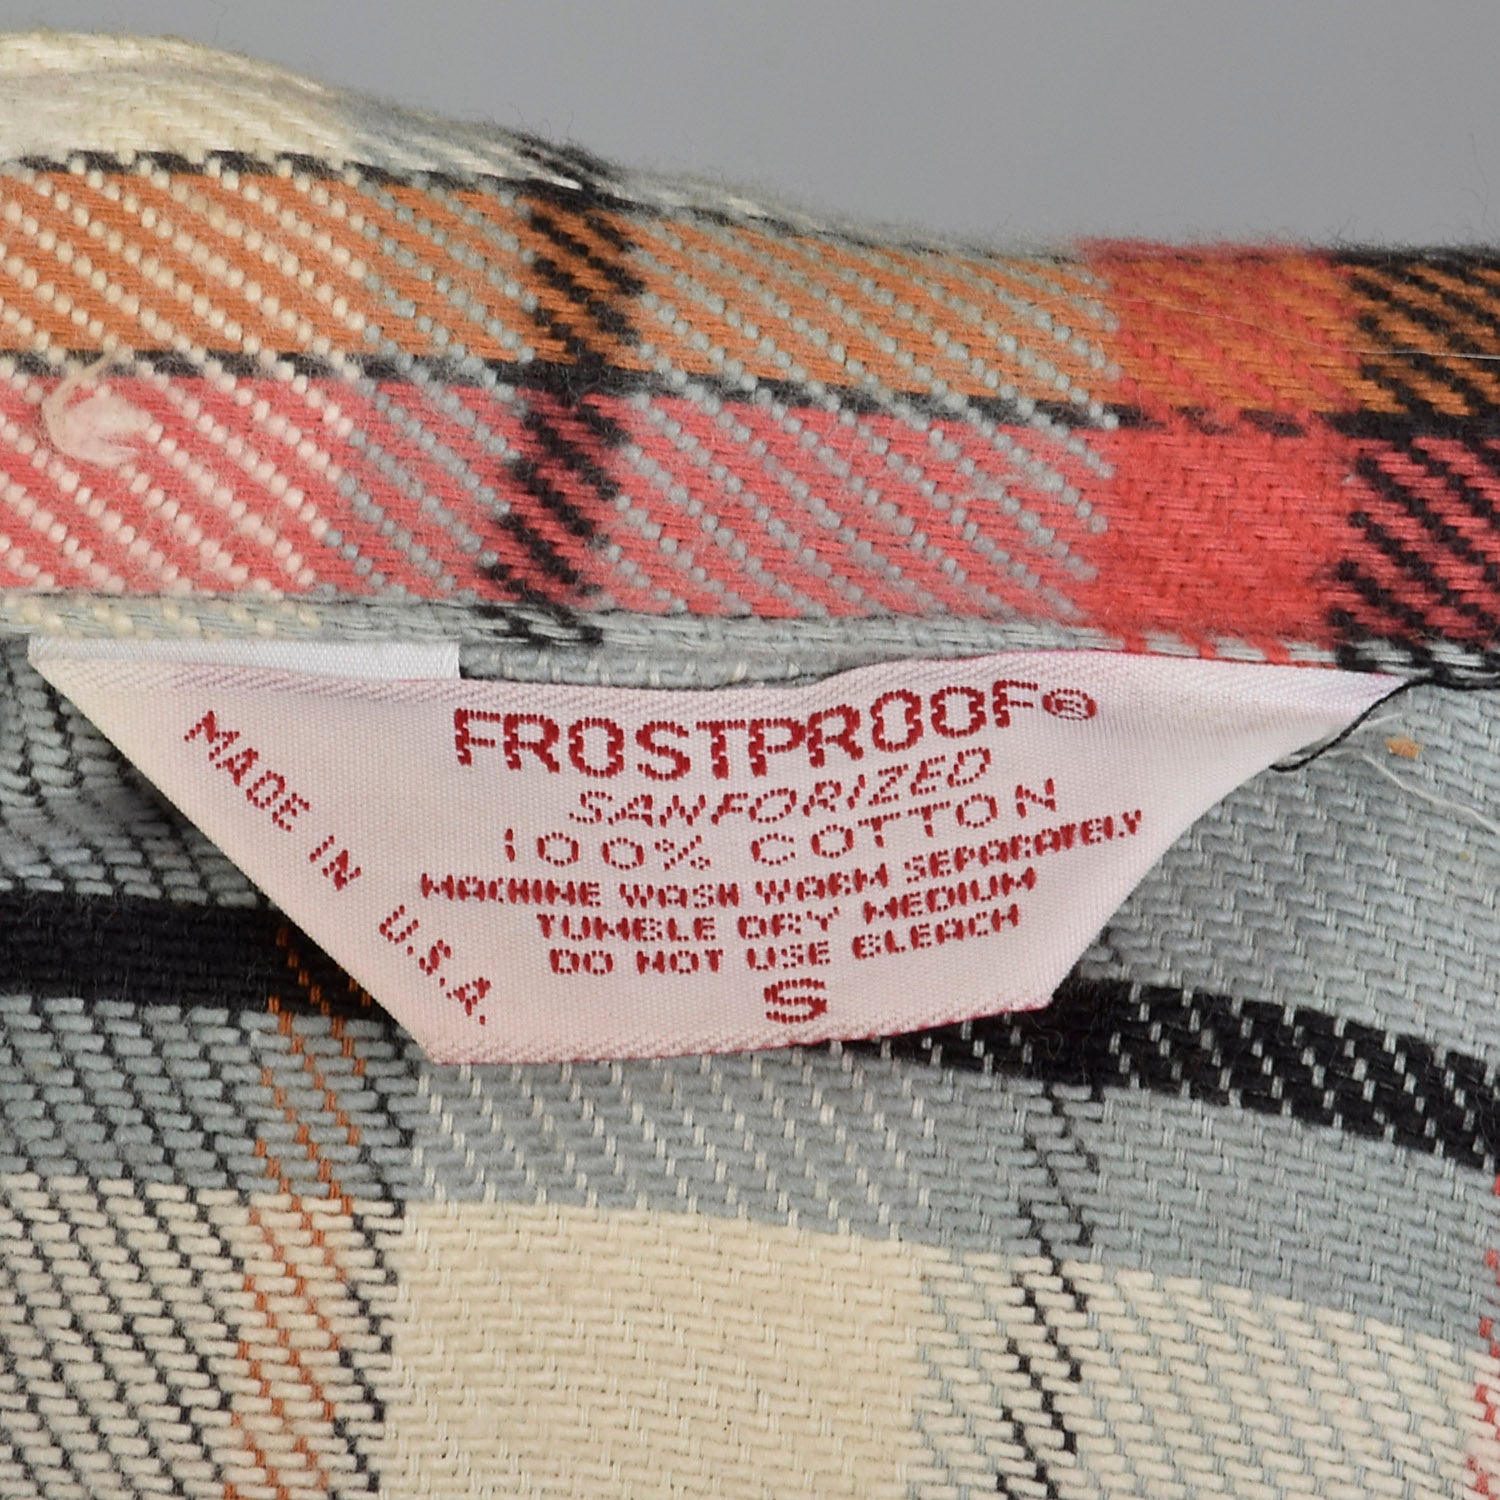 Medium 1960s Frost Proof Cotton Flannel Shirt